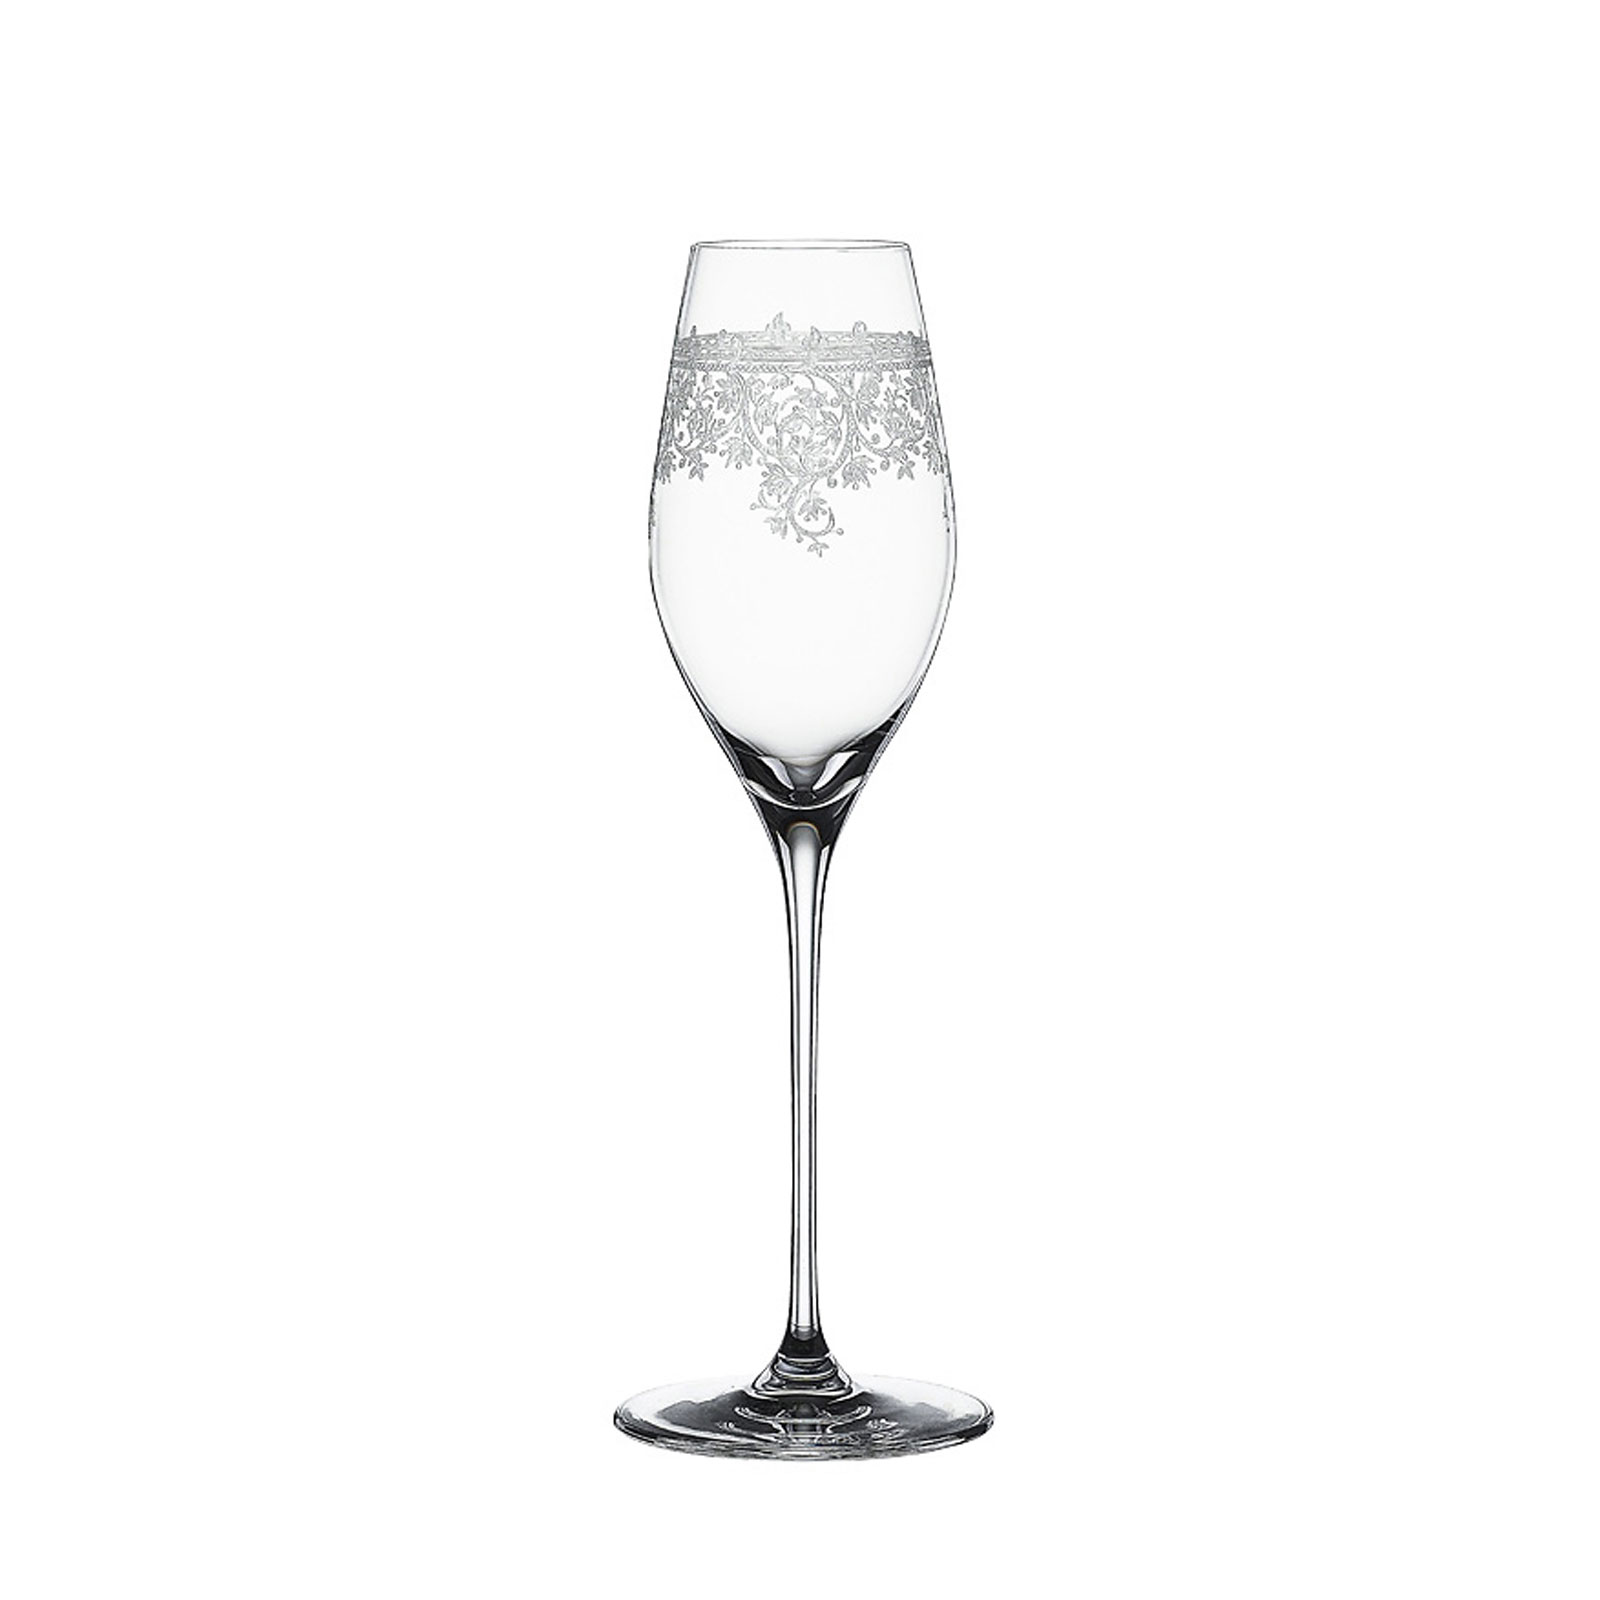 Spiegelau Arabesque Champagnerglas, 2er-Set